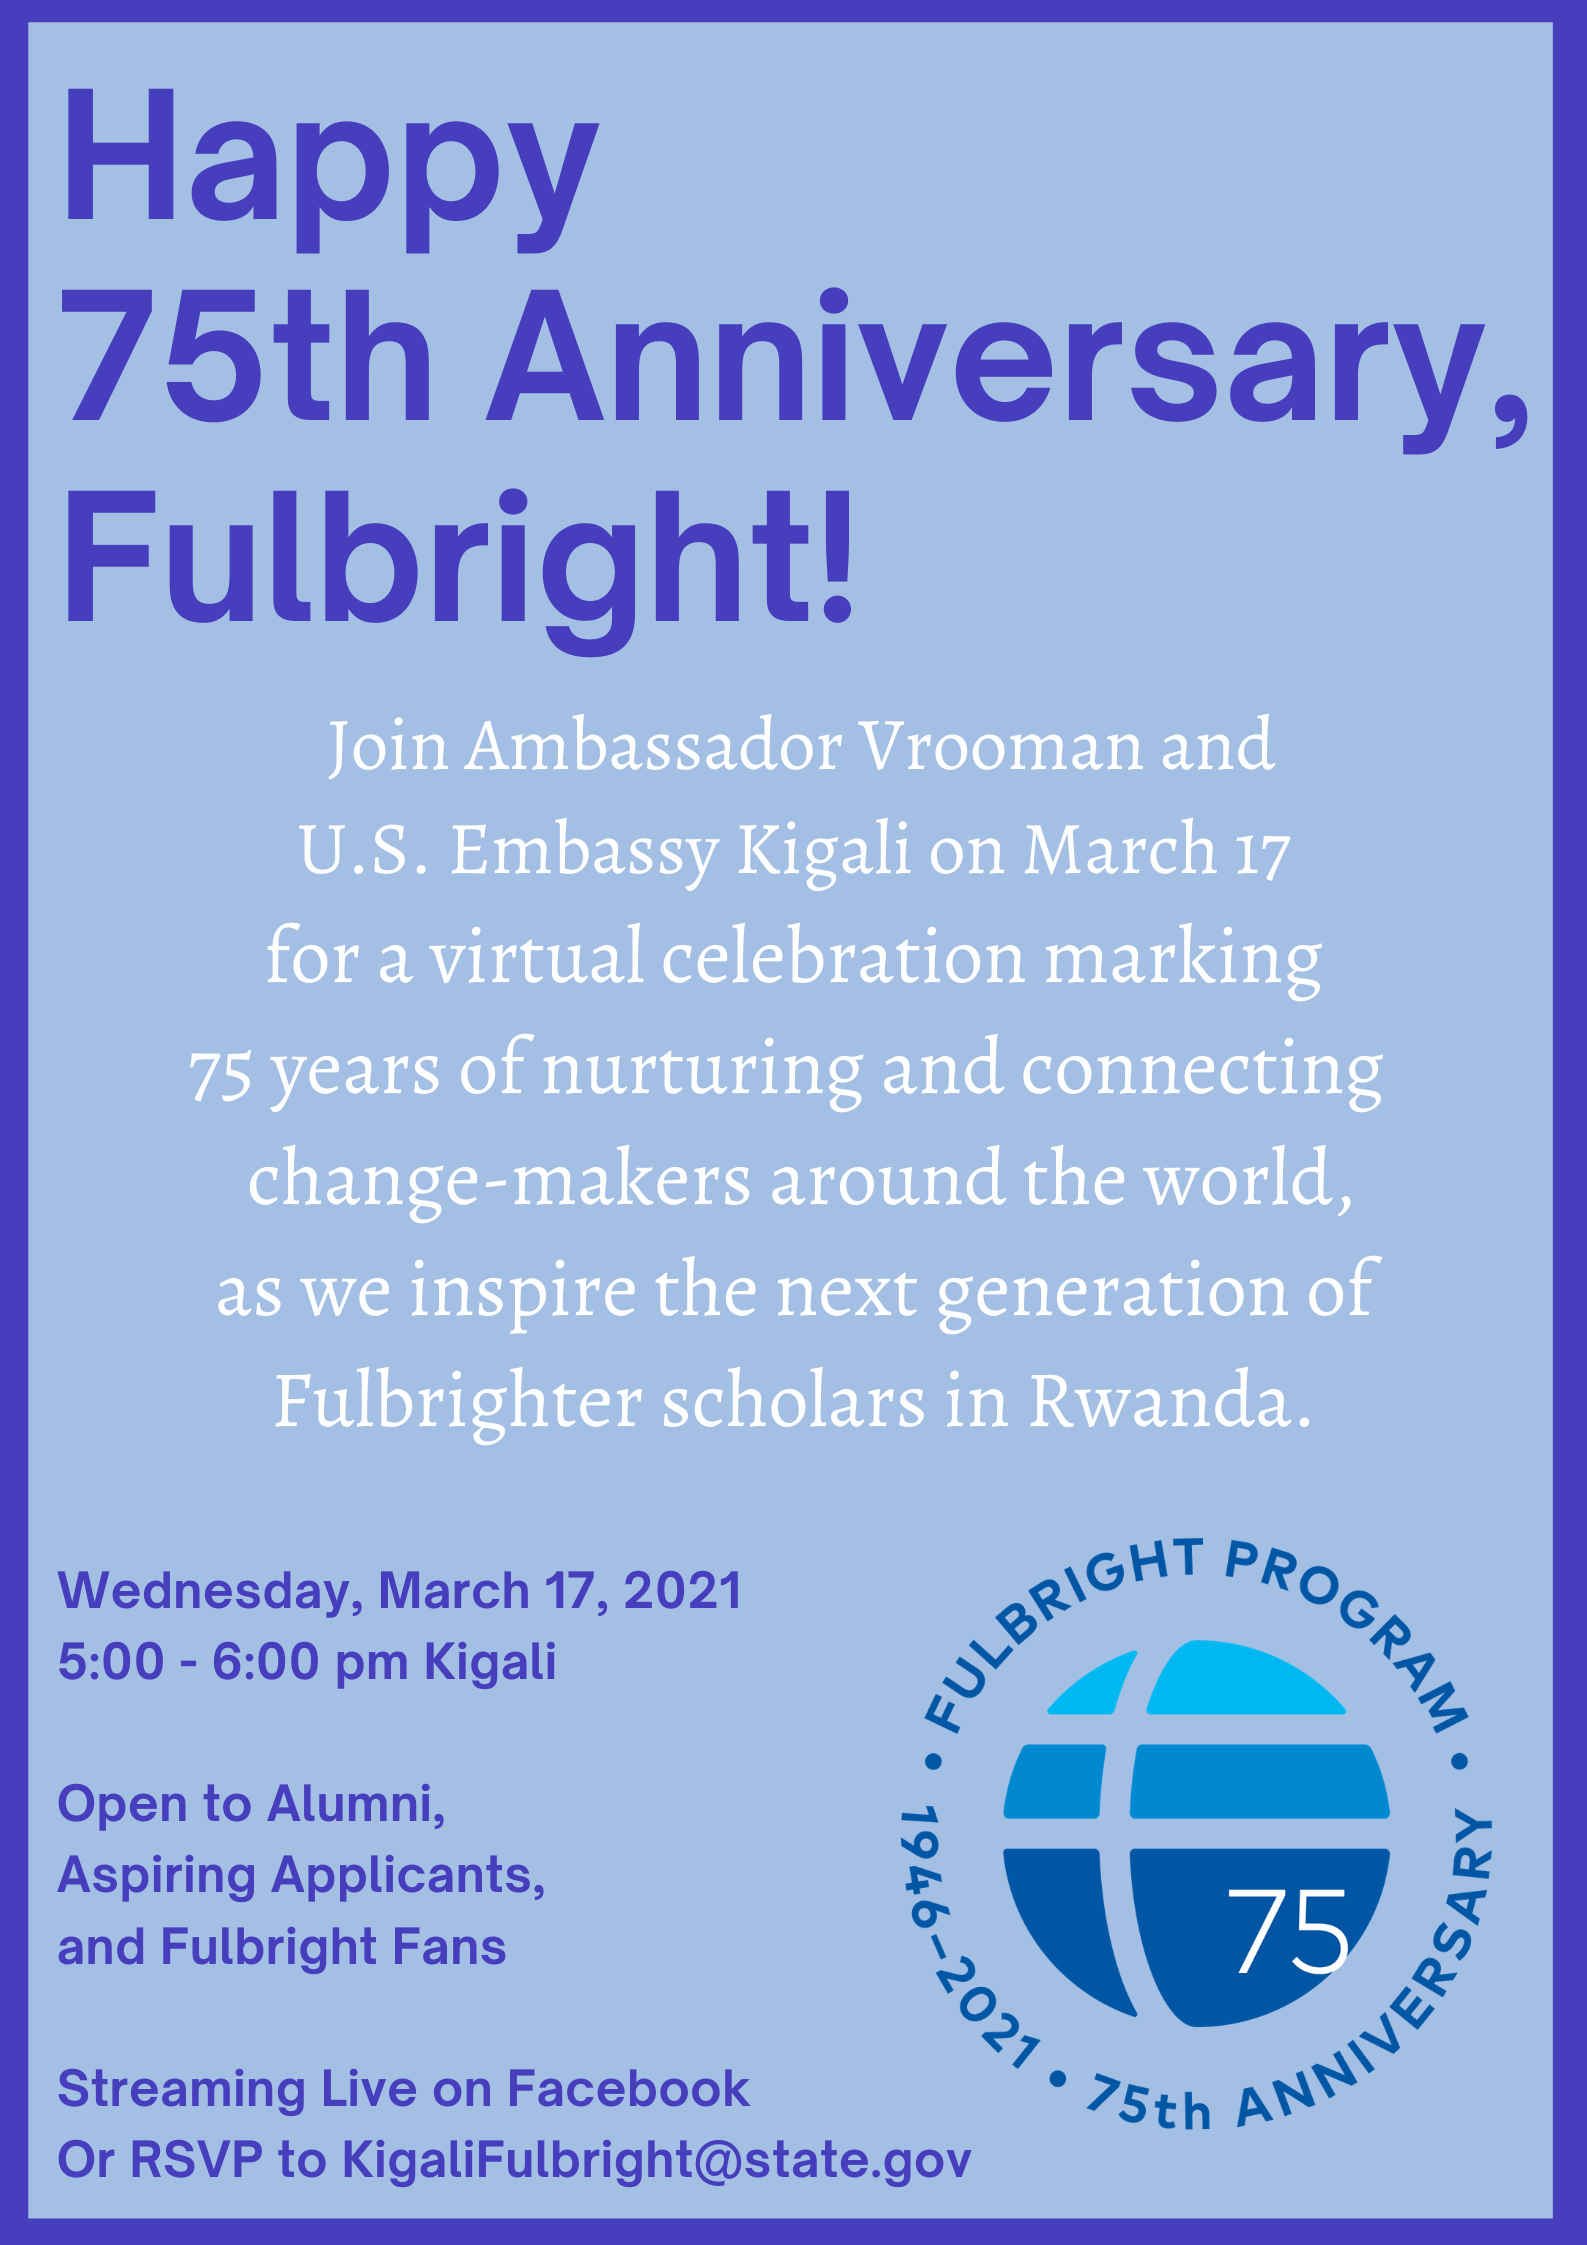 Fulbright Day: Rwanda